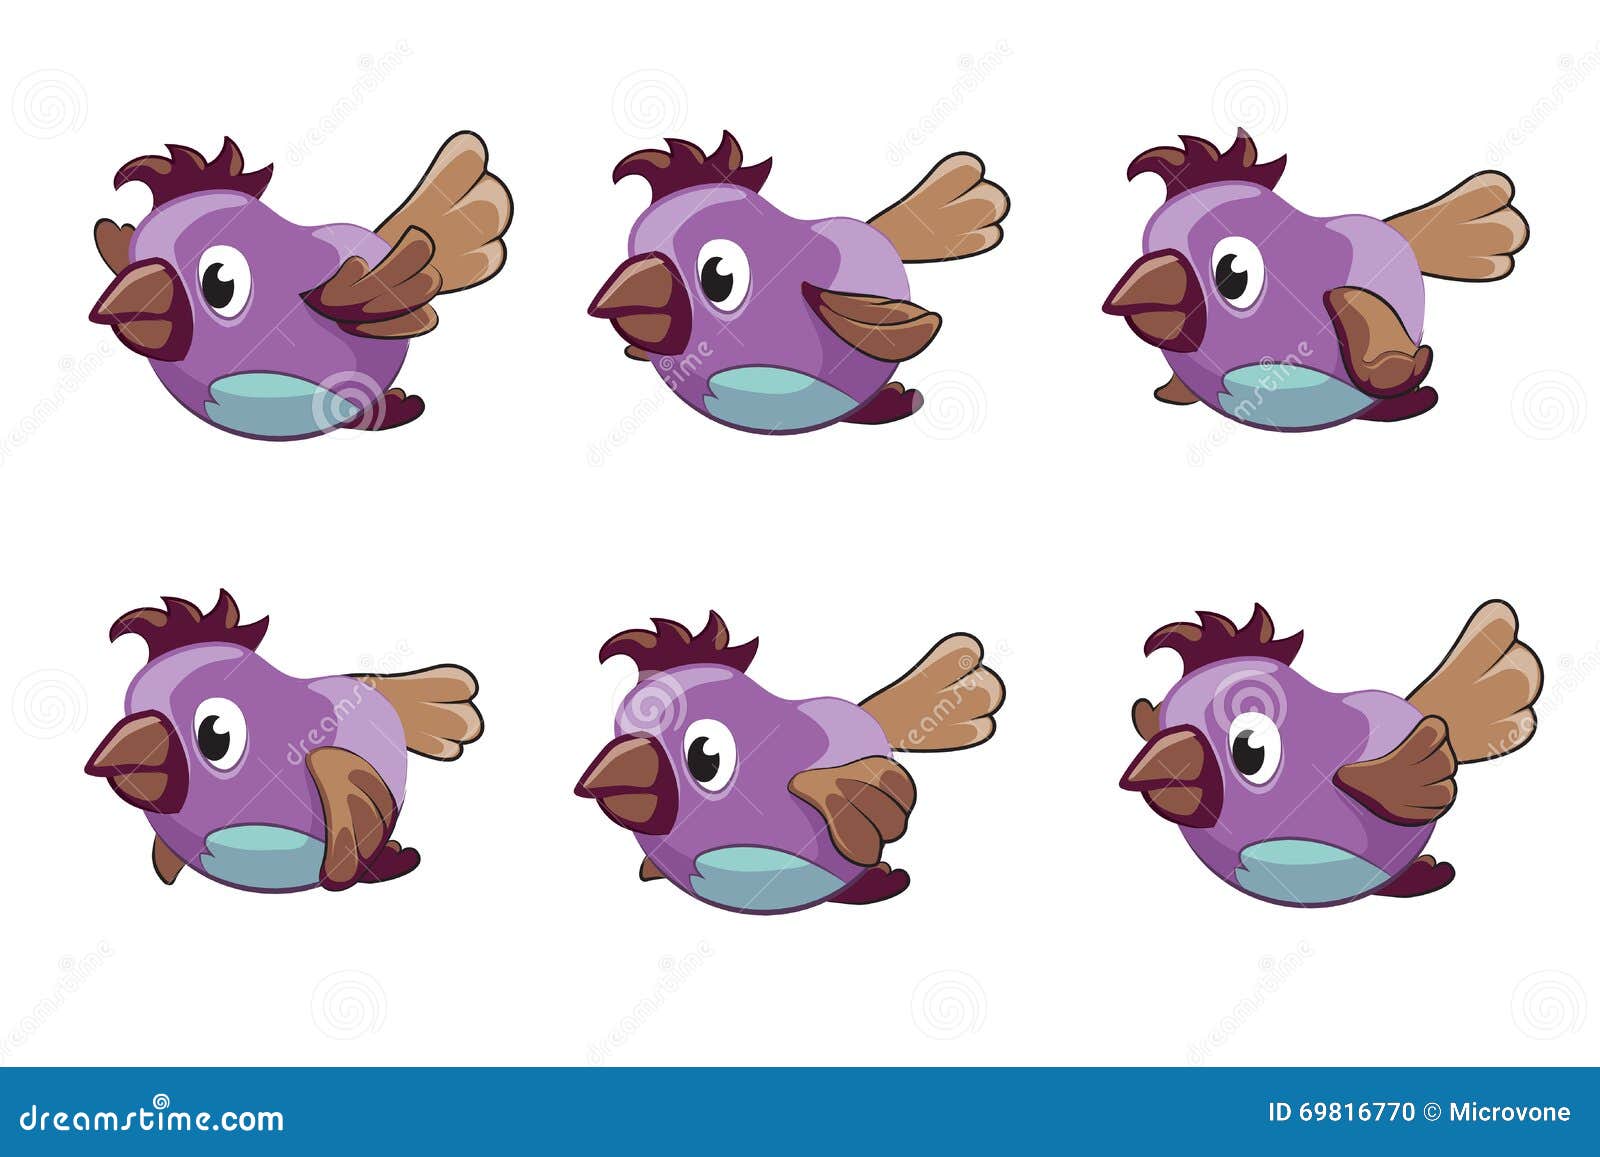 Bird Animation Vector Frames Stock Vector - Illustration of feather,  creative: 69816770